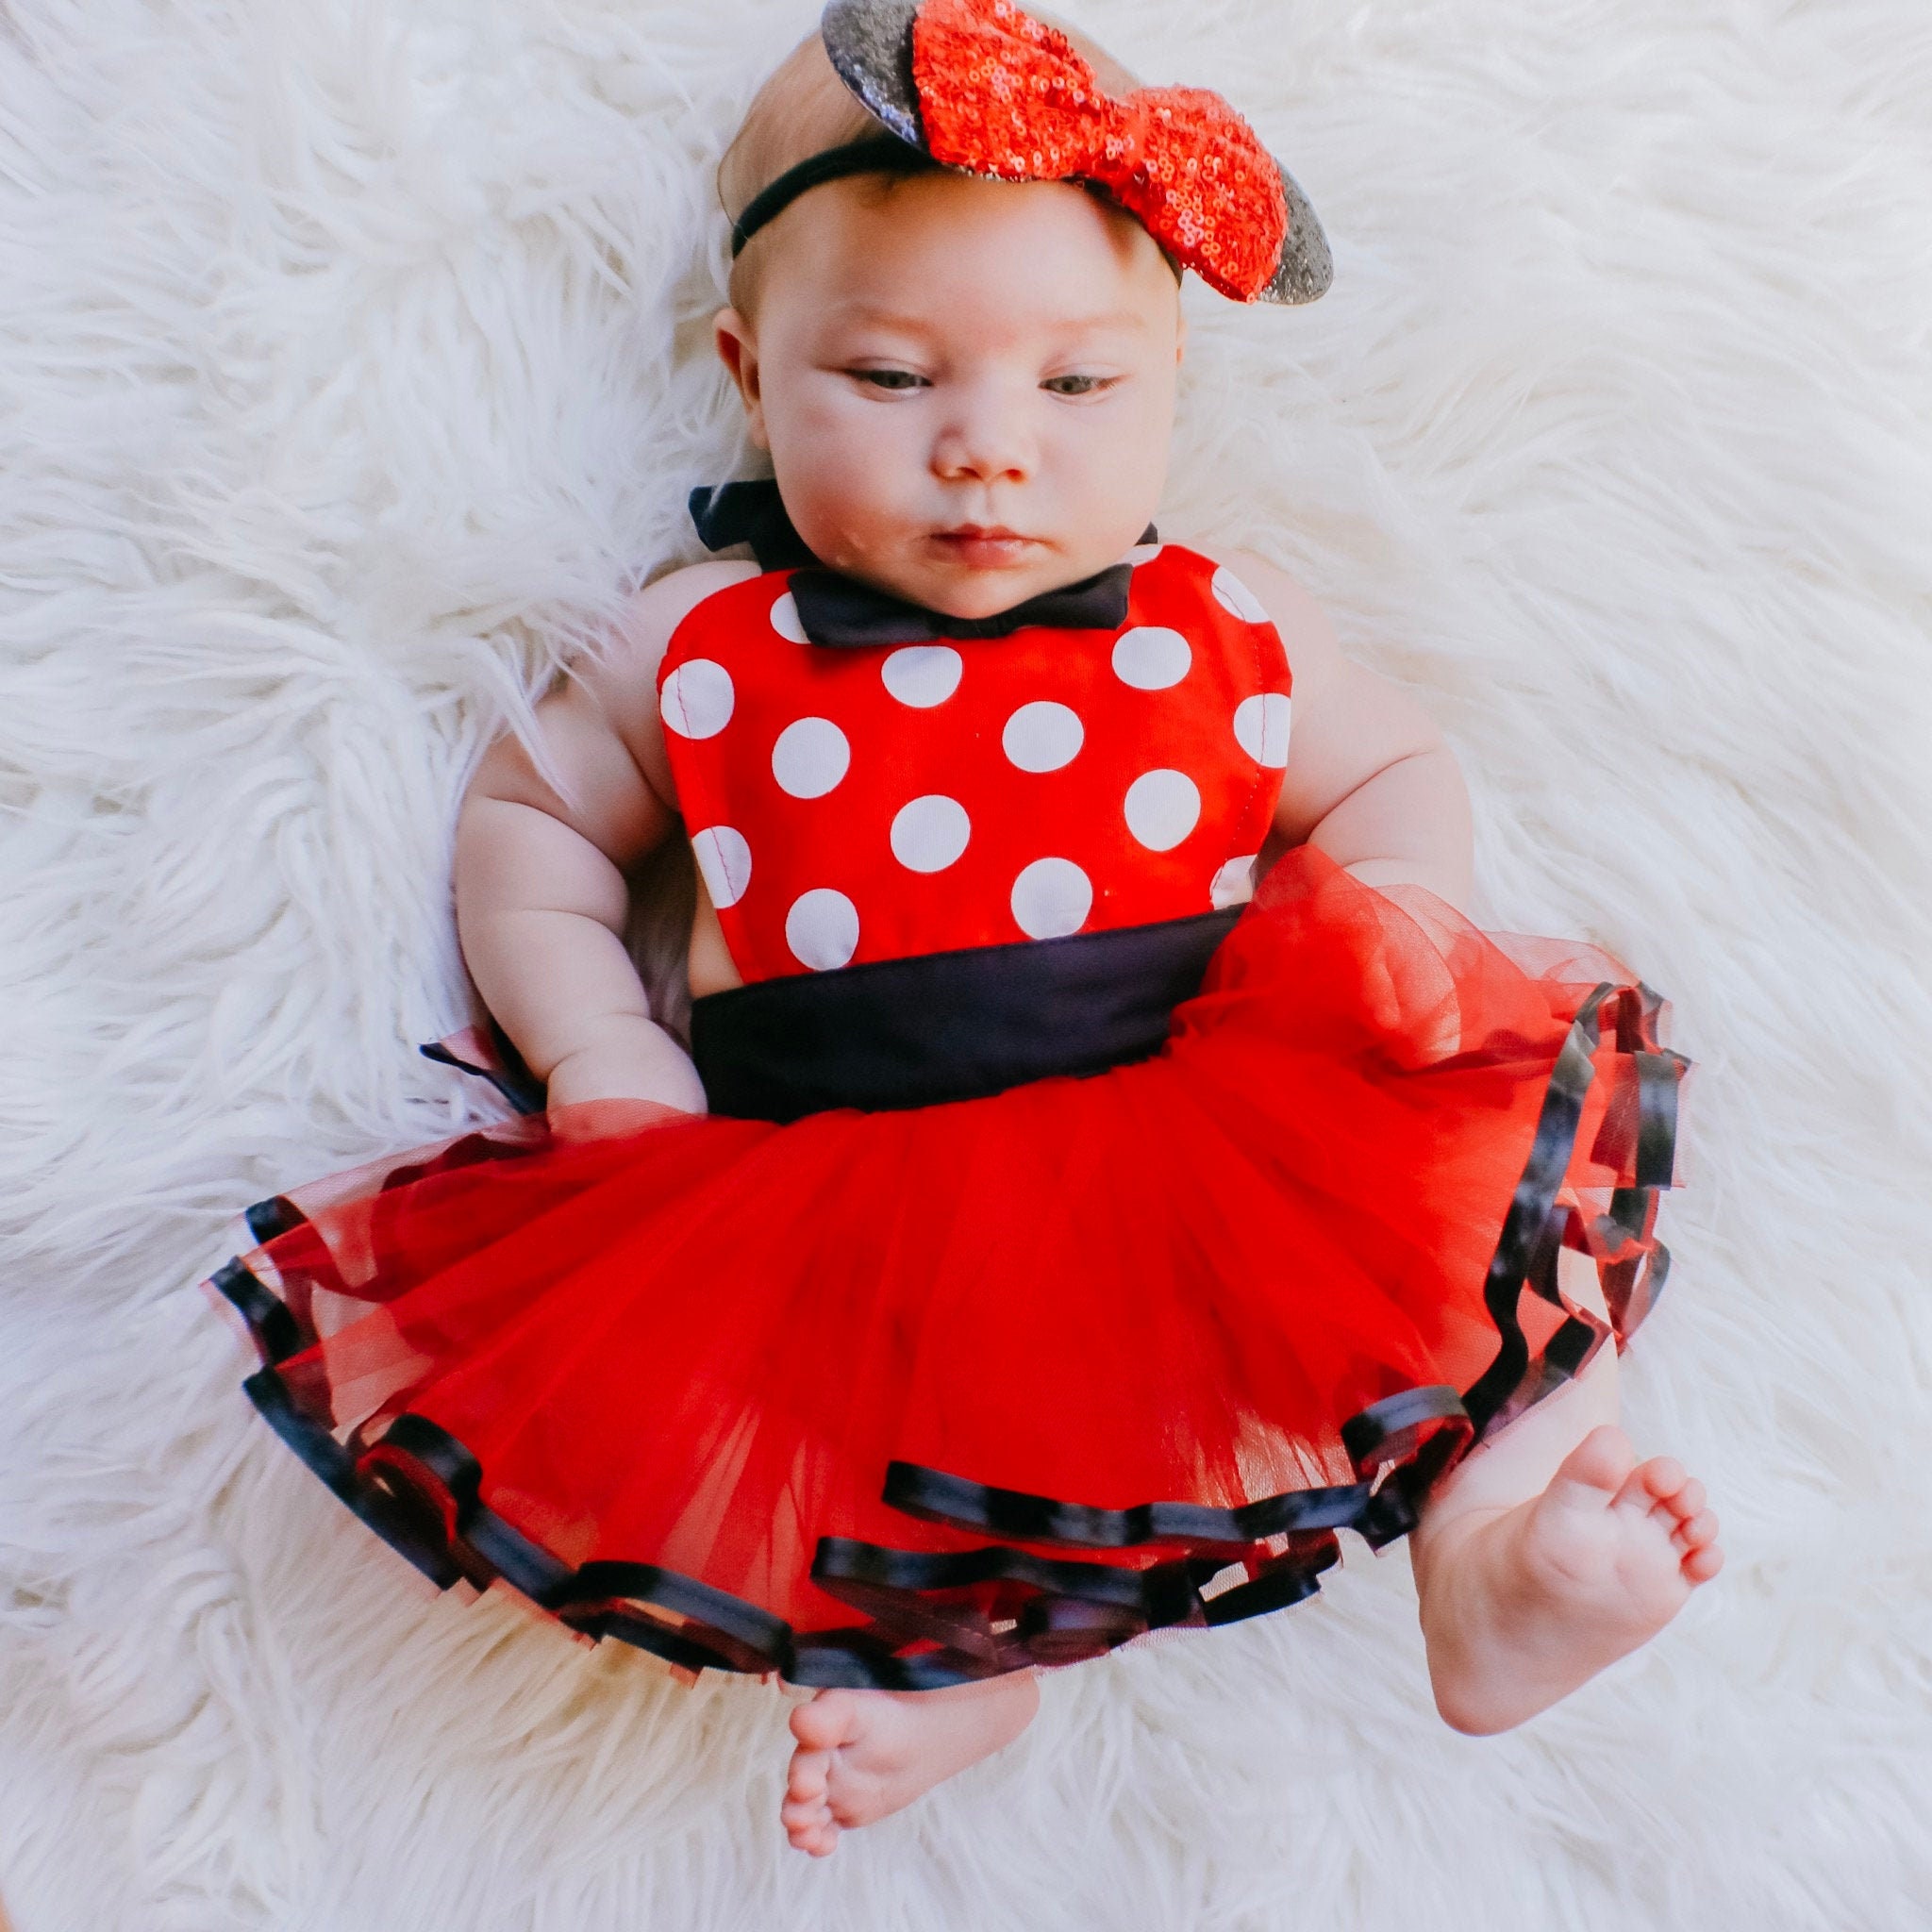 Disney - Disfraz infantil de Minnie Mouse para bebé, color rojo